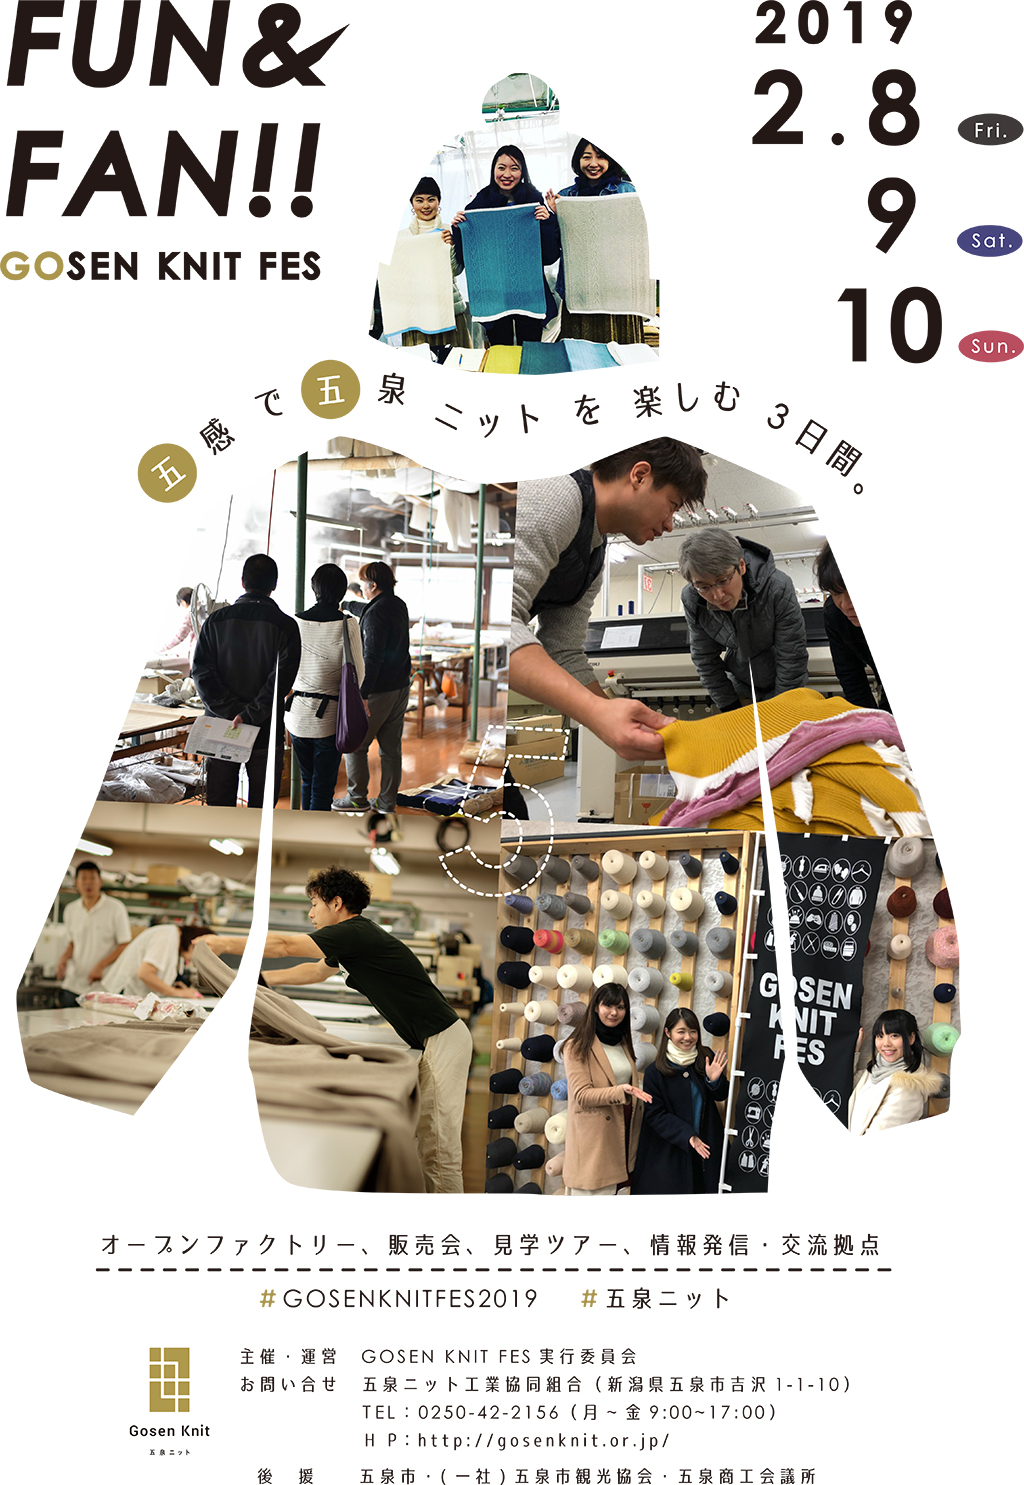 FUN & FAN GOSEN KNIT FES 五感で五泉ニットを楽しむ3日間 2019 2.8 2.9 2.10